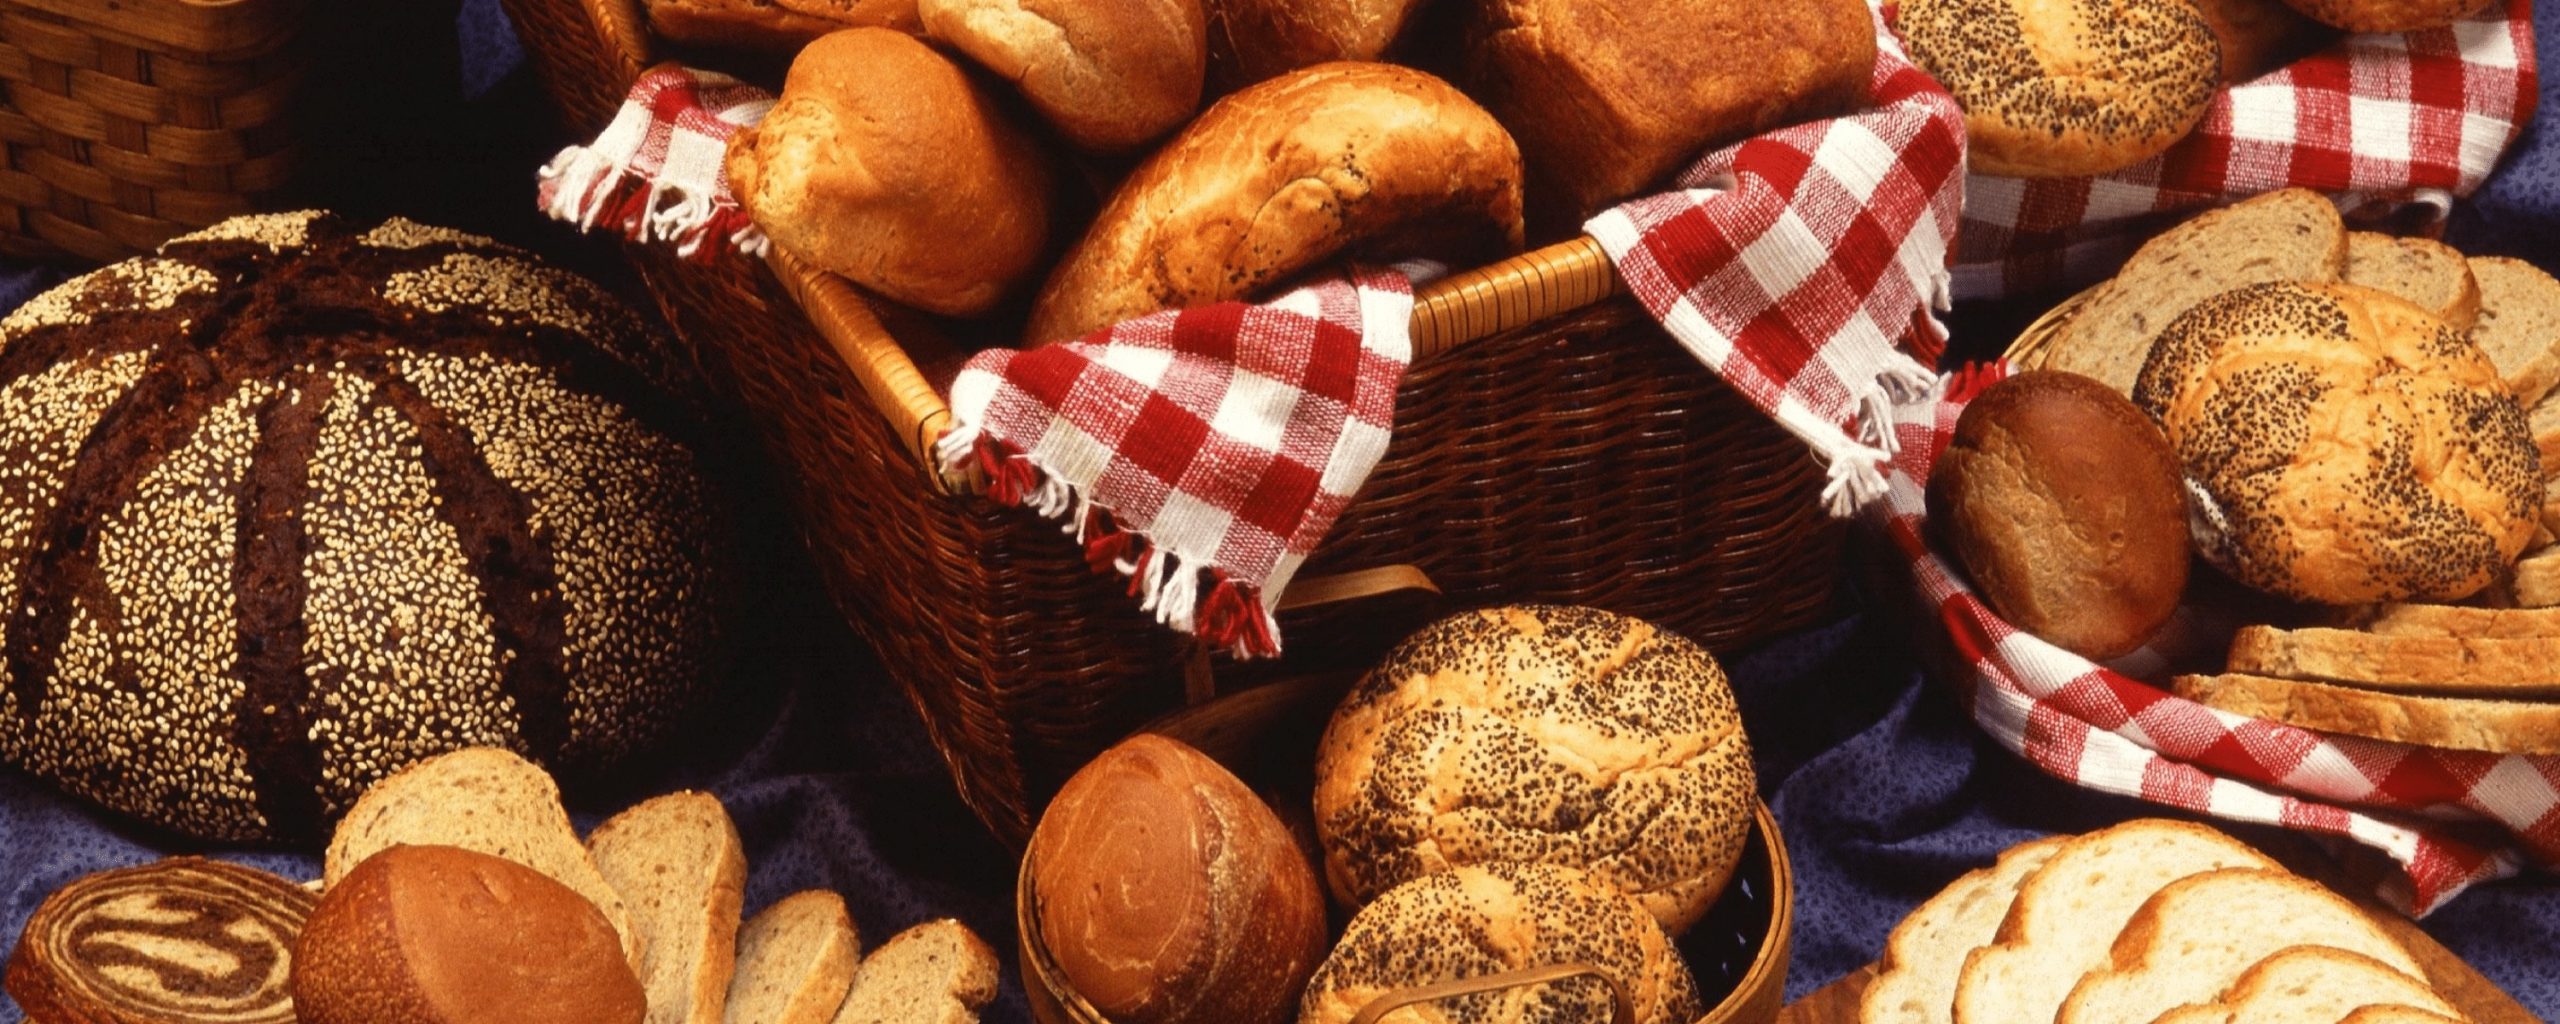 fresh bread on a picnic basket